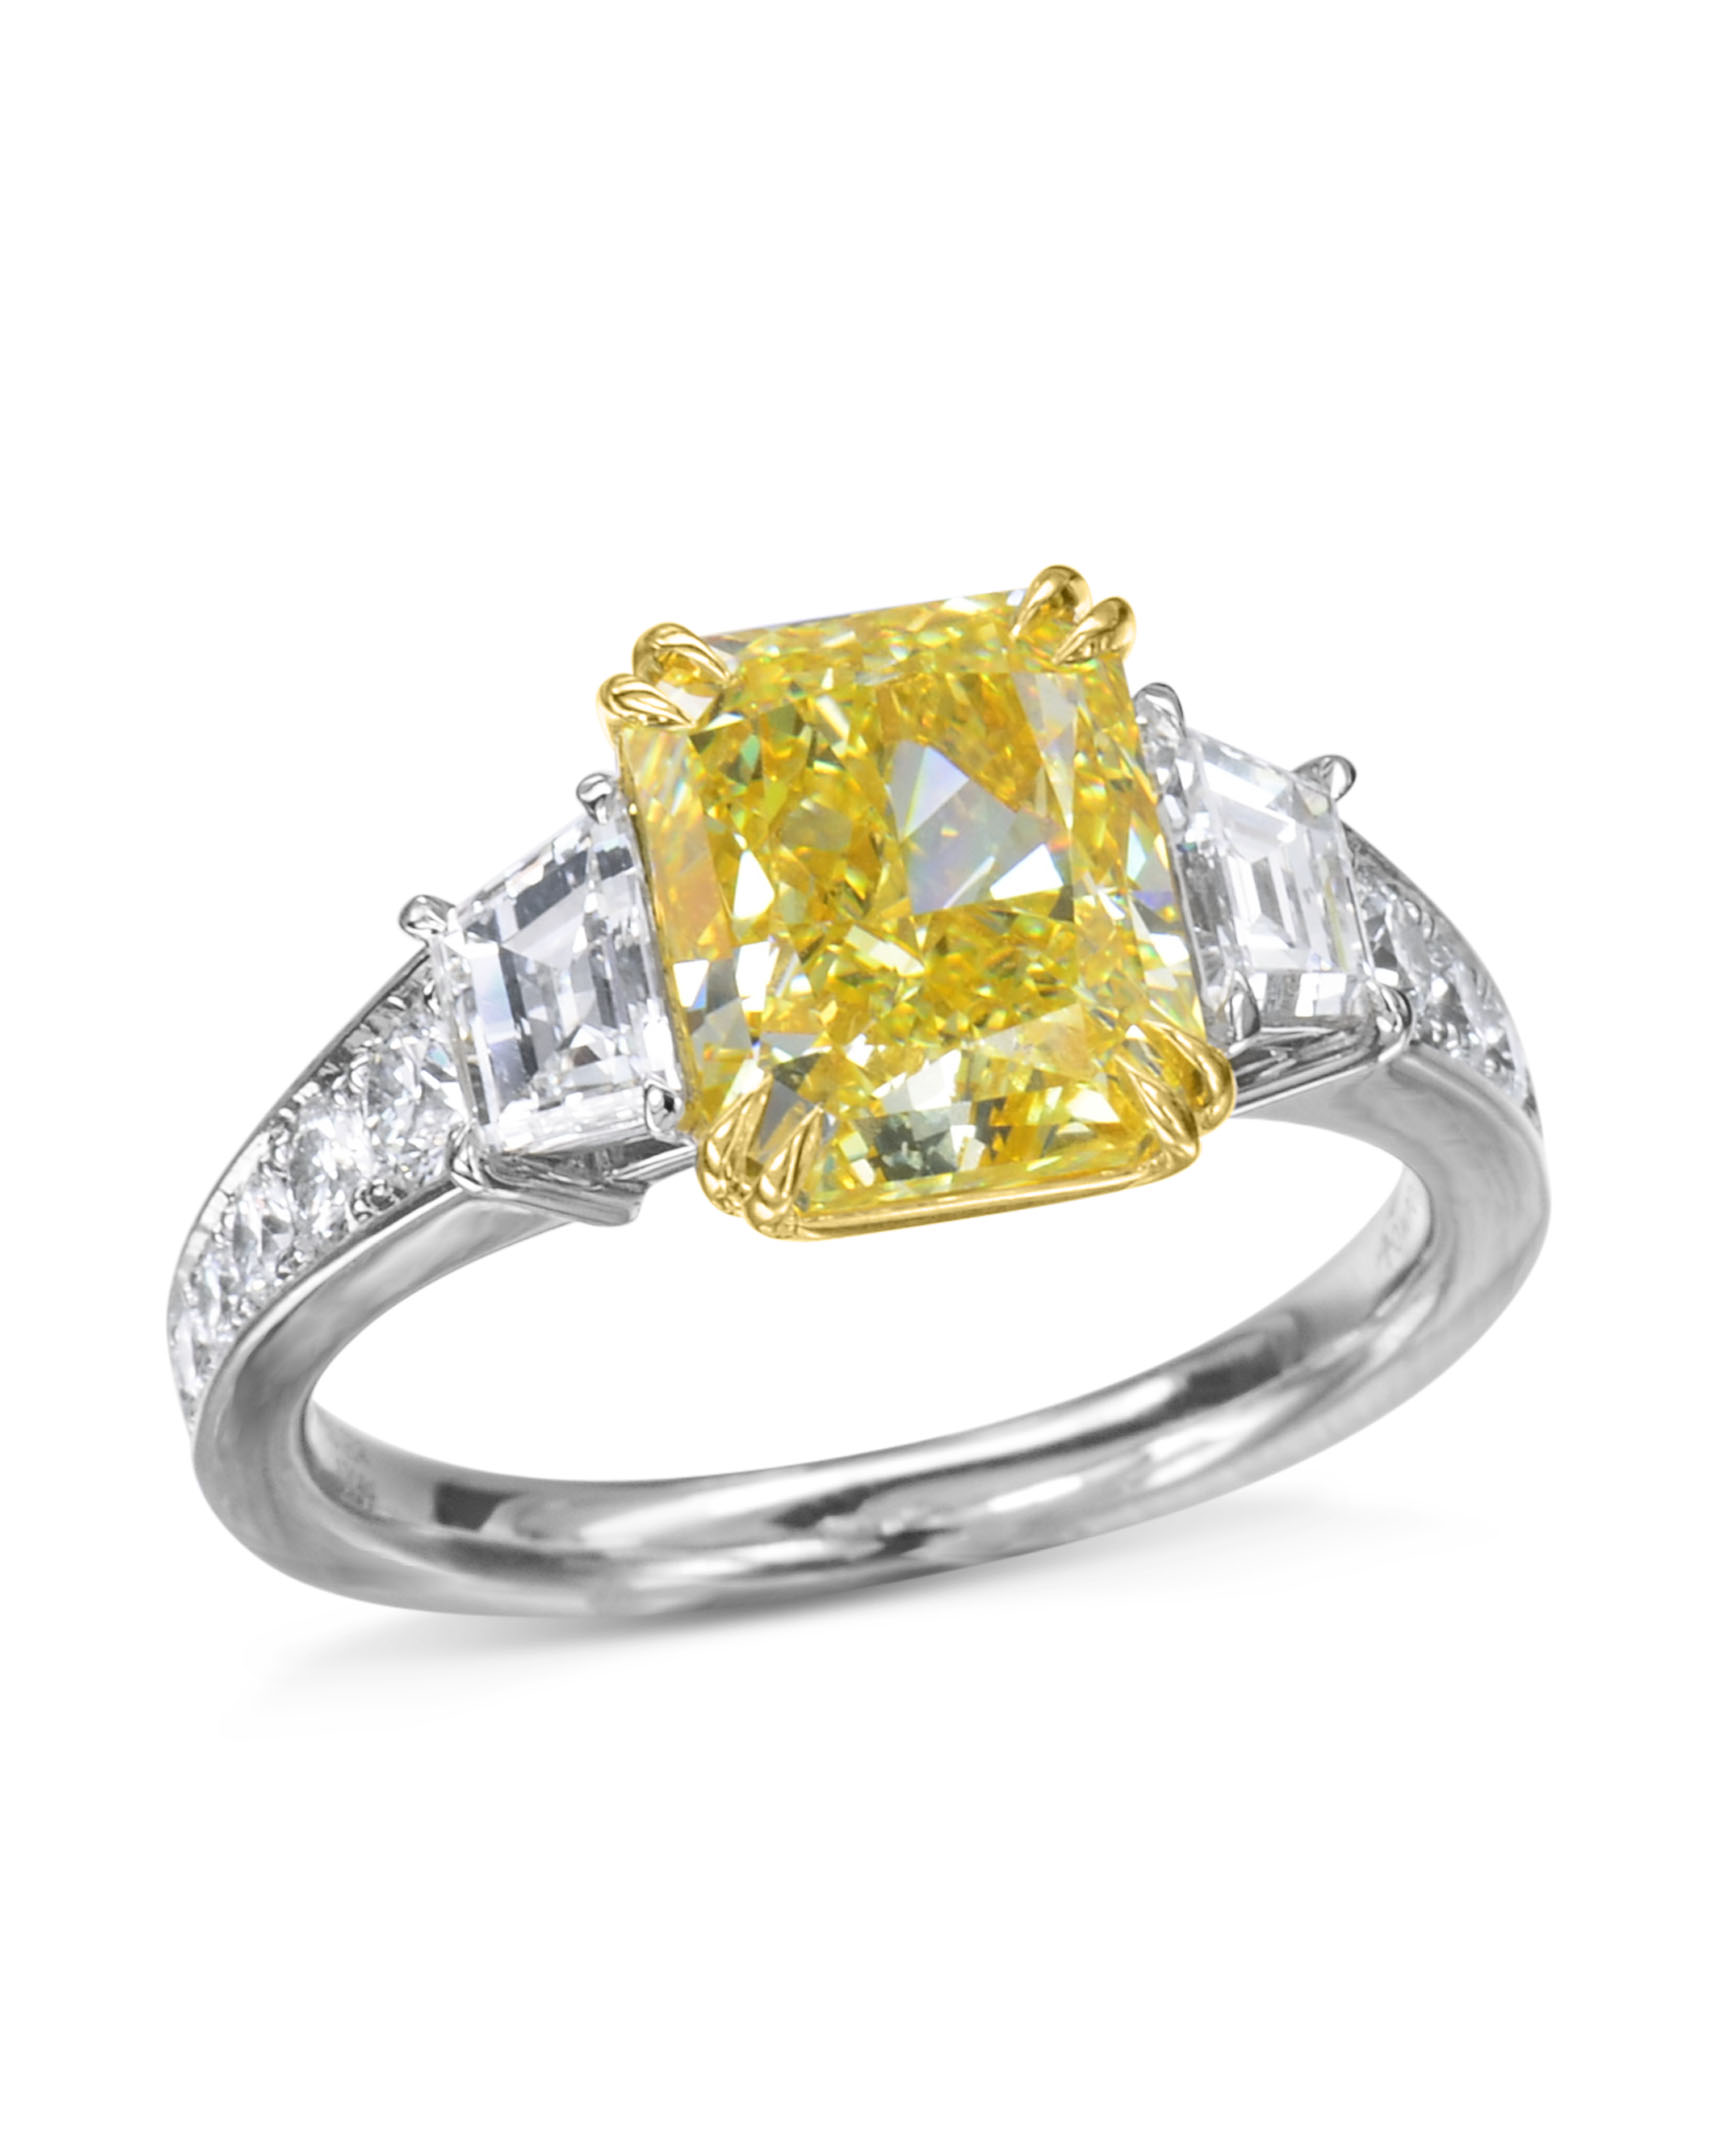 square radiant cut diamond engagement rings